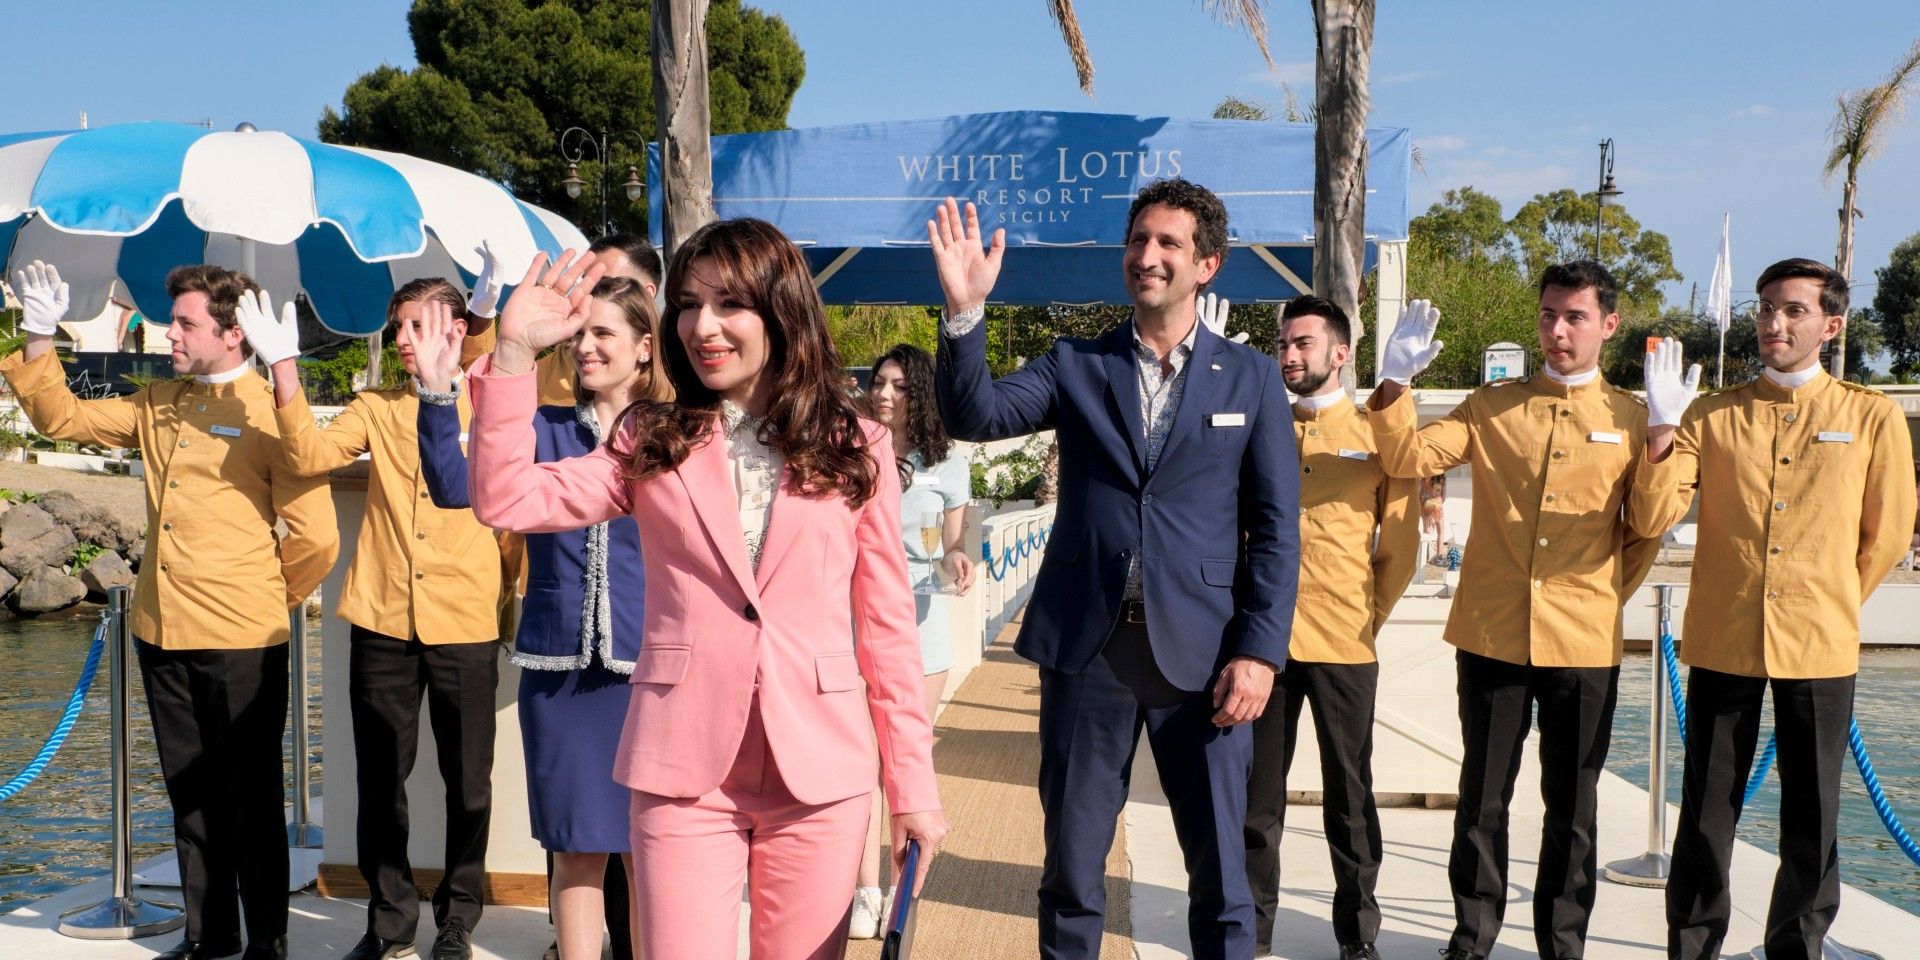 The staff led by Sabrina Impacciatore as Valentina waving in The White Lotus season 2